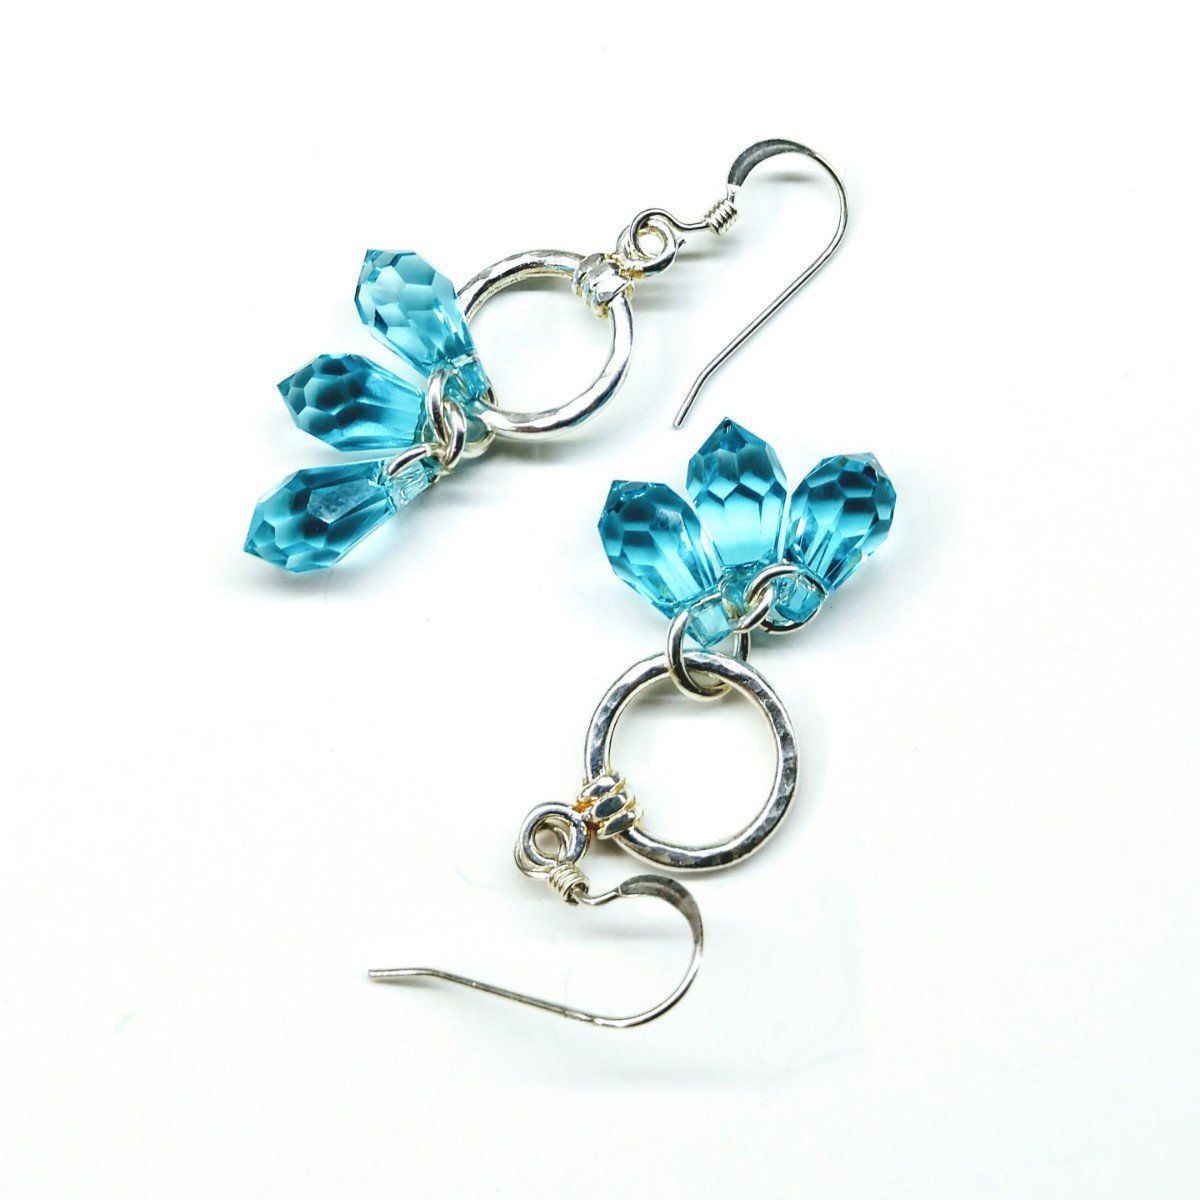 Handcrafted Sterling Silver Aqua Crystal Drop Earrings with Swarovski Crystals - Earrings - Bijou Her -  -  - 